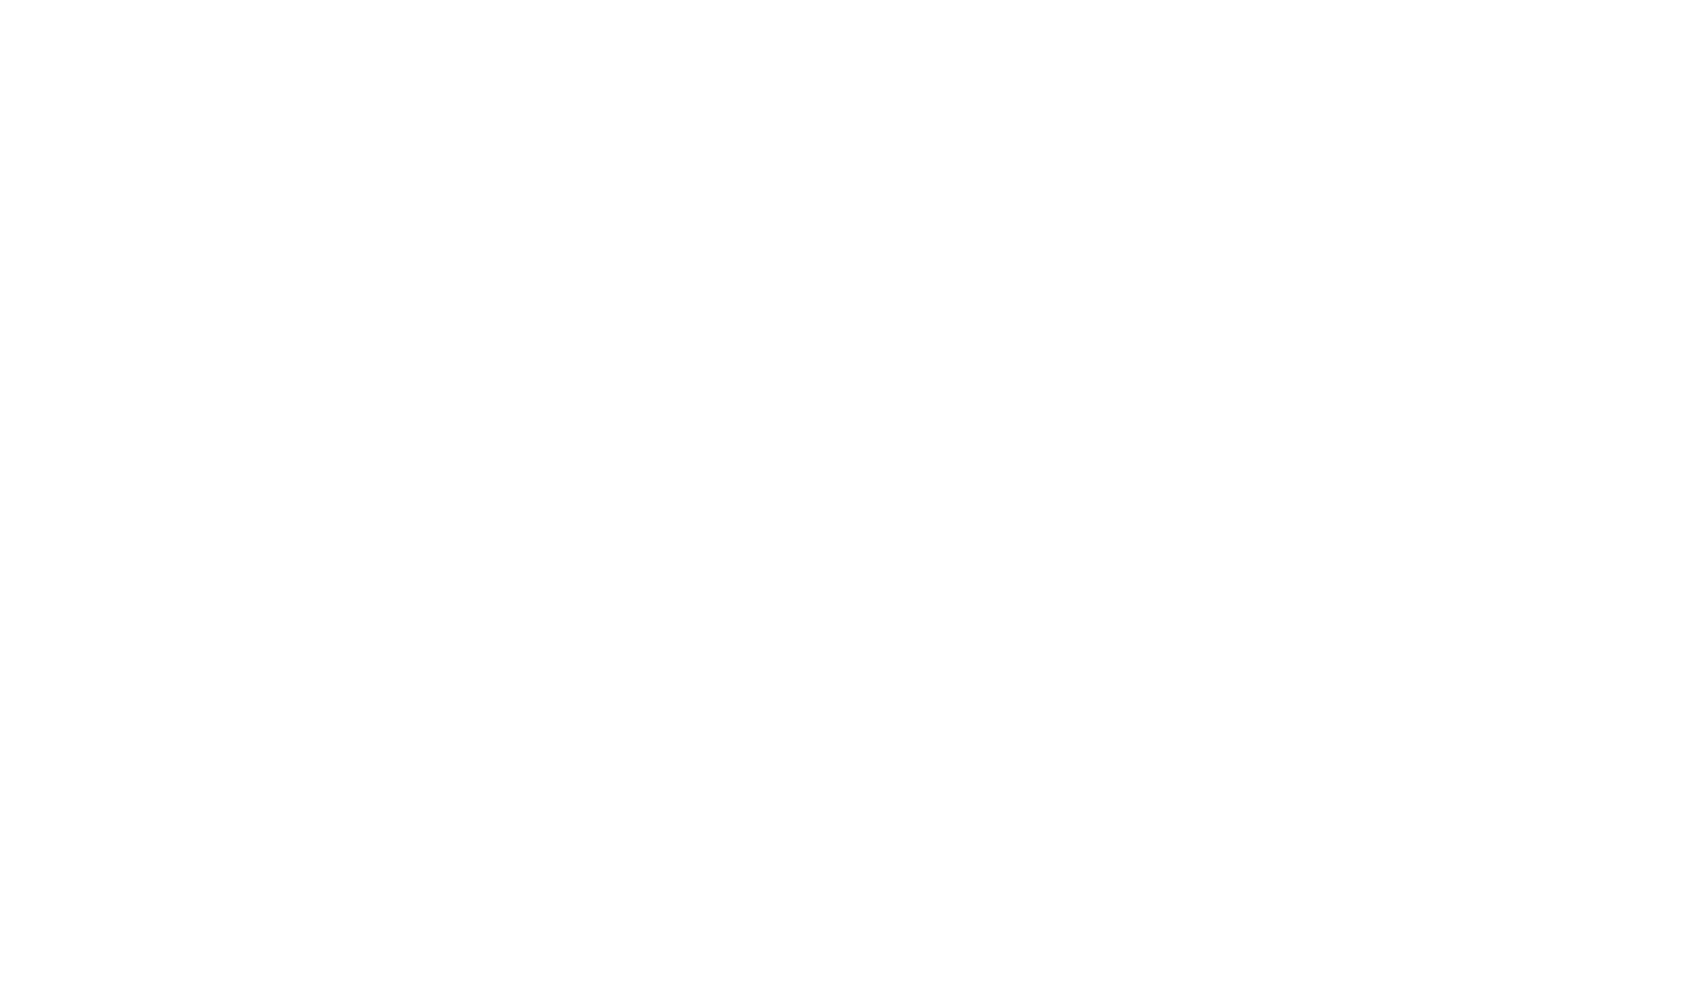 EVO Payments logo large for dark backgrounds (transparent PNG)